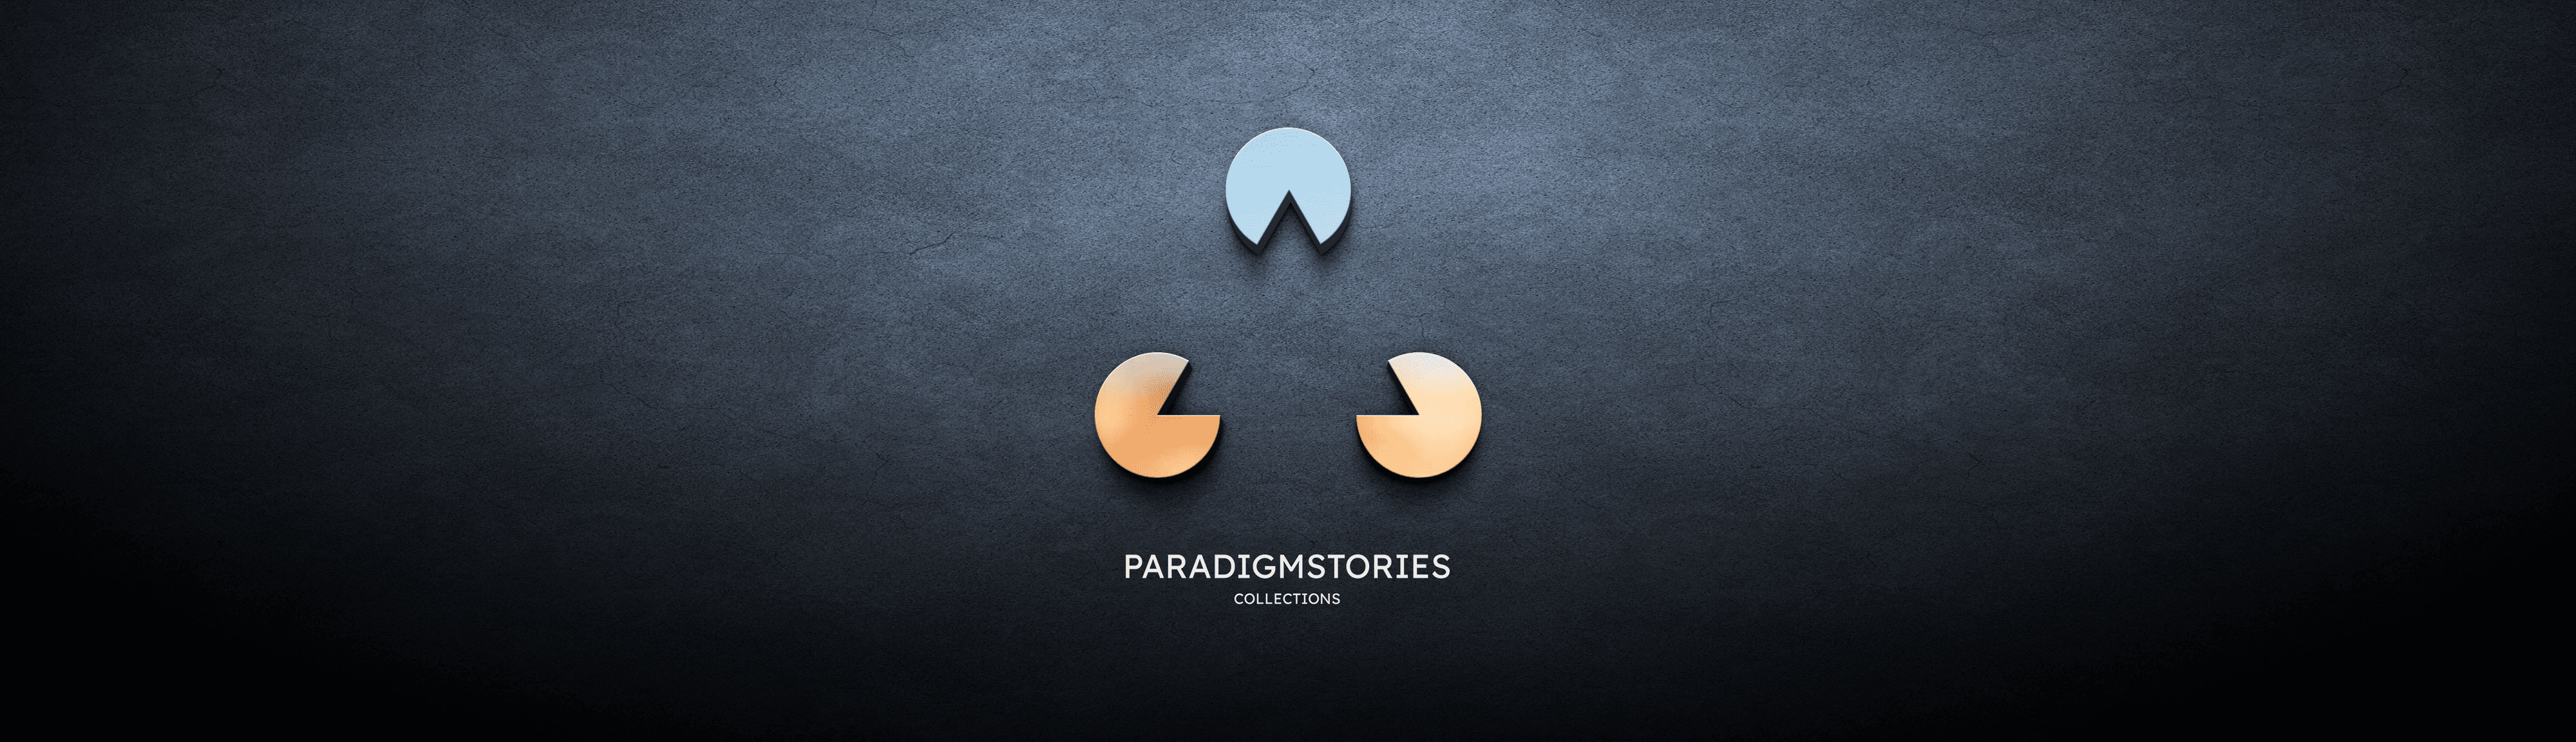 ParadigmStories banner